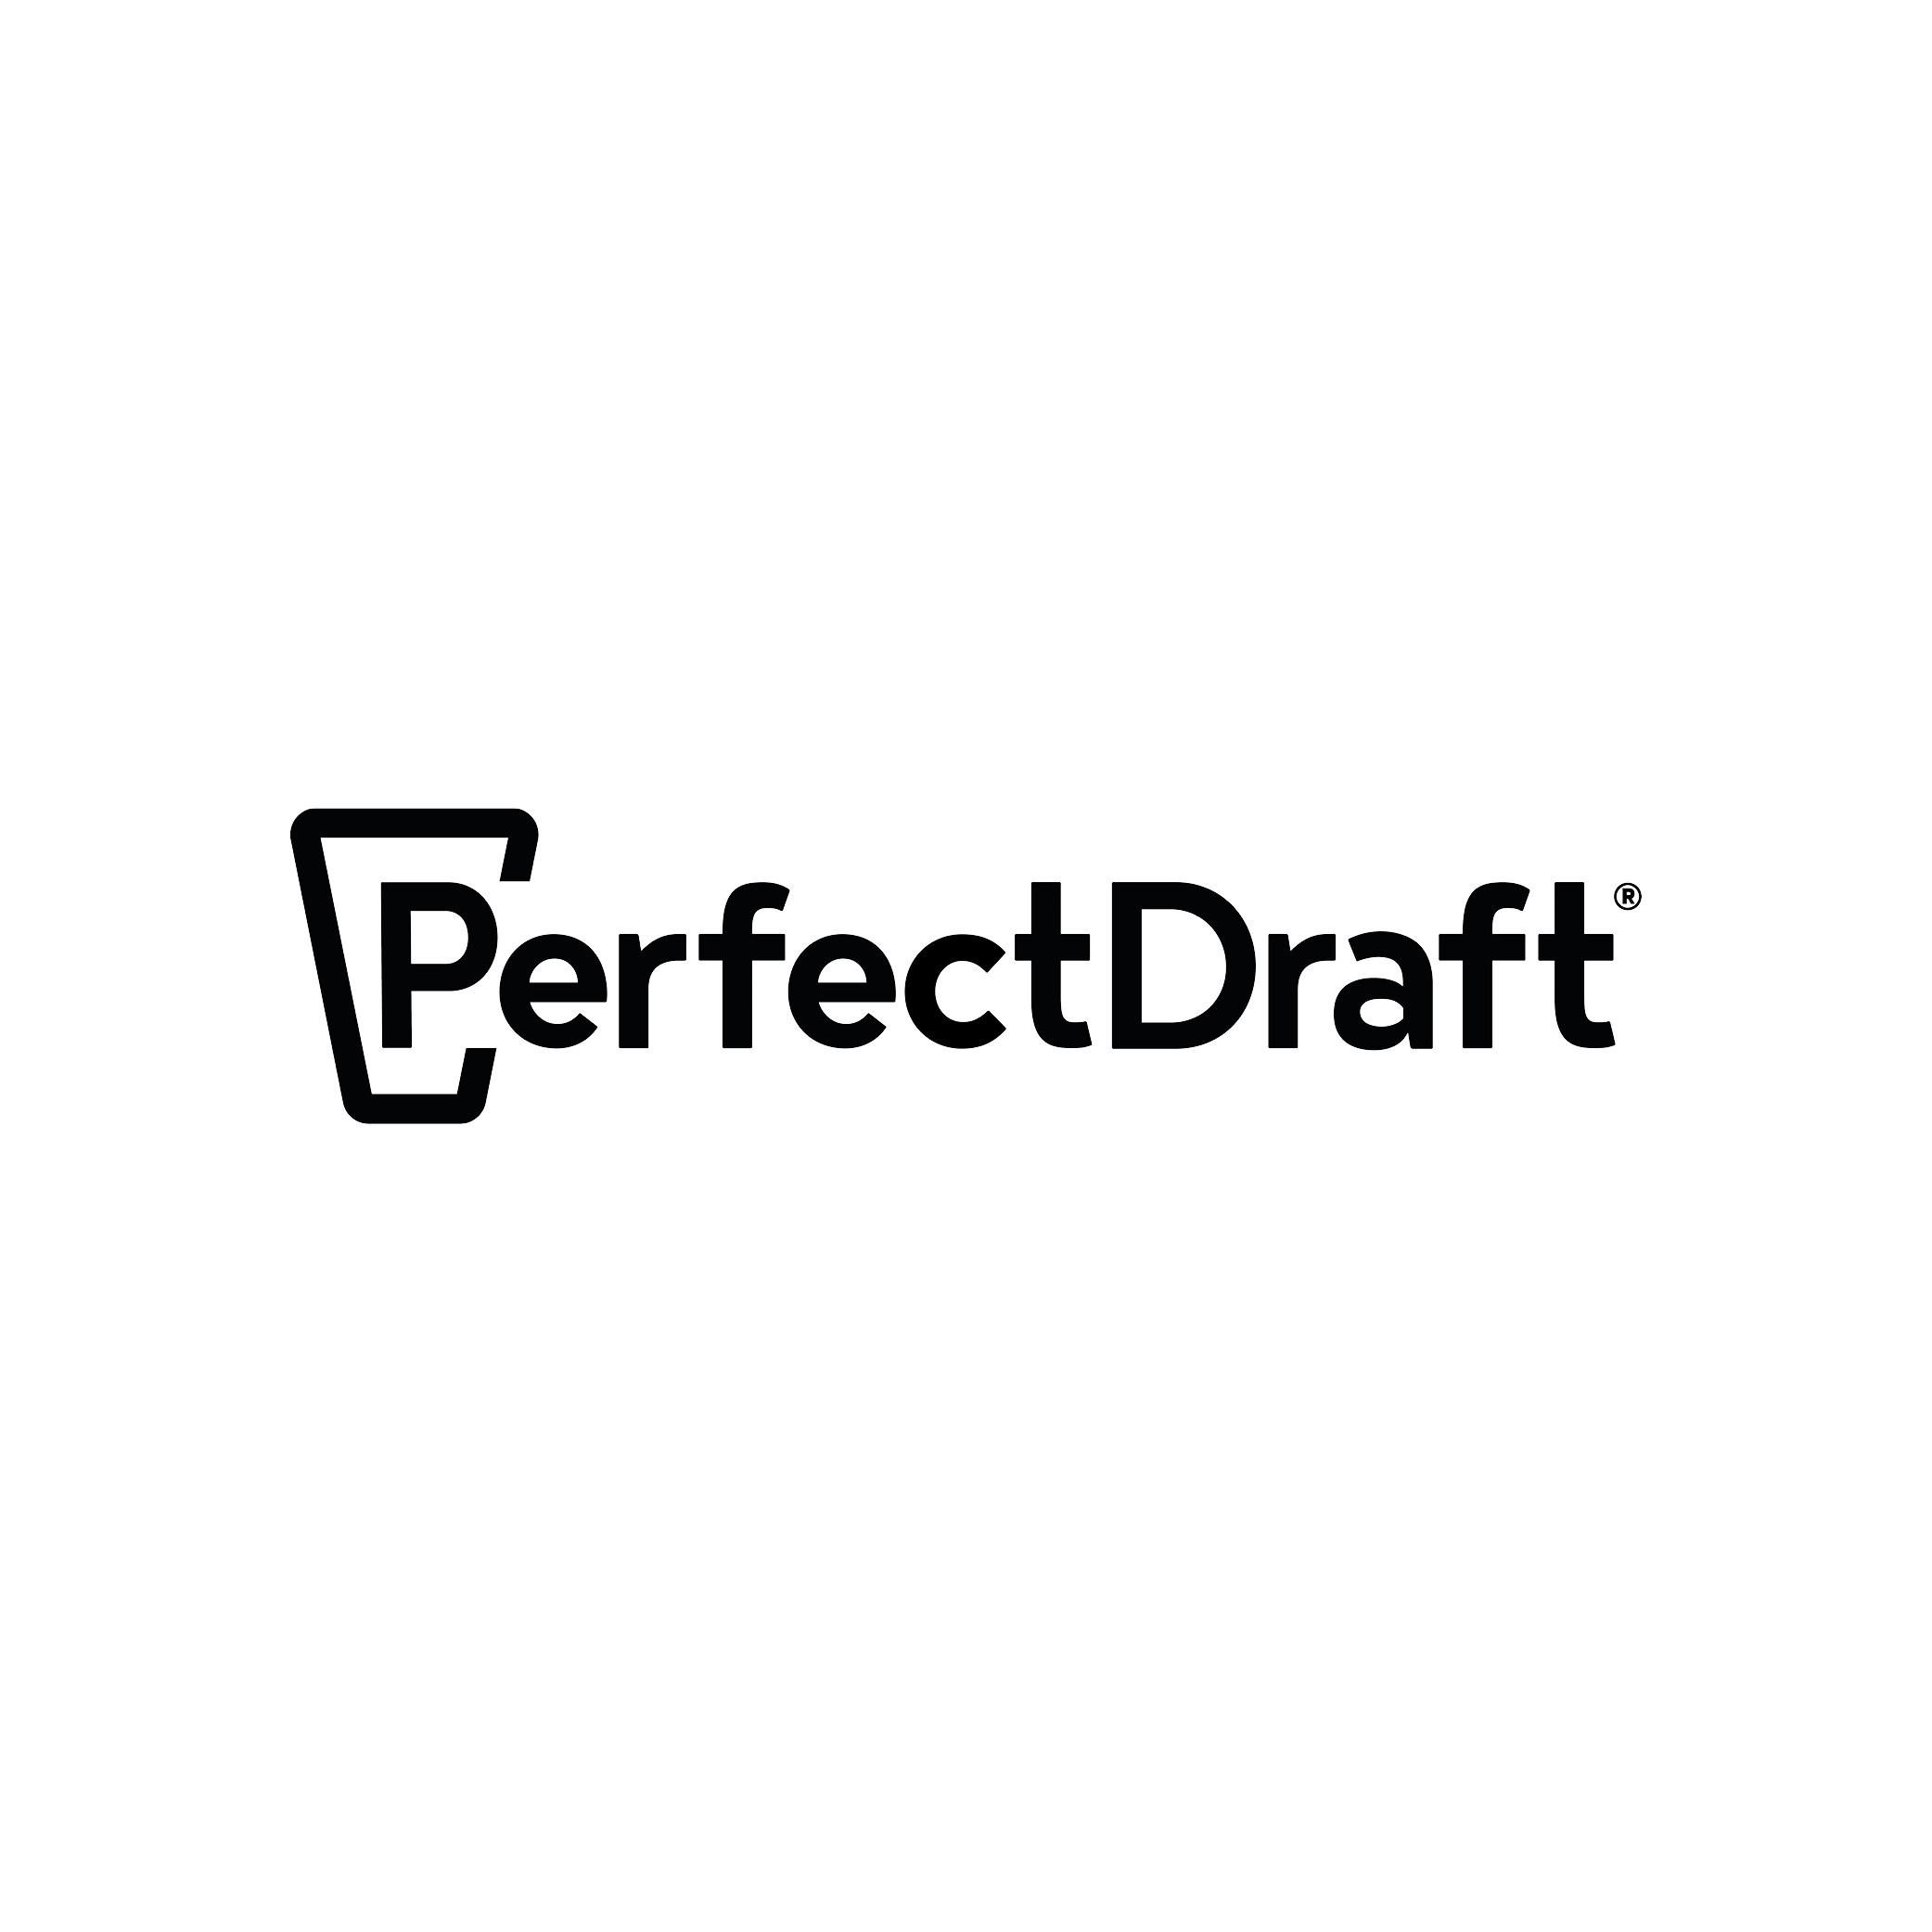 PerfectDraft Coupons & Promo Codes